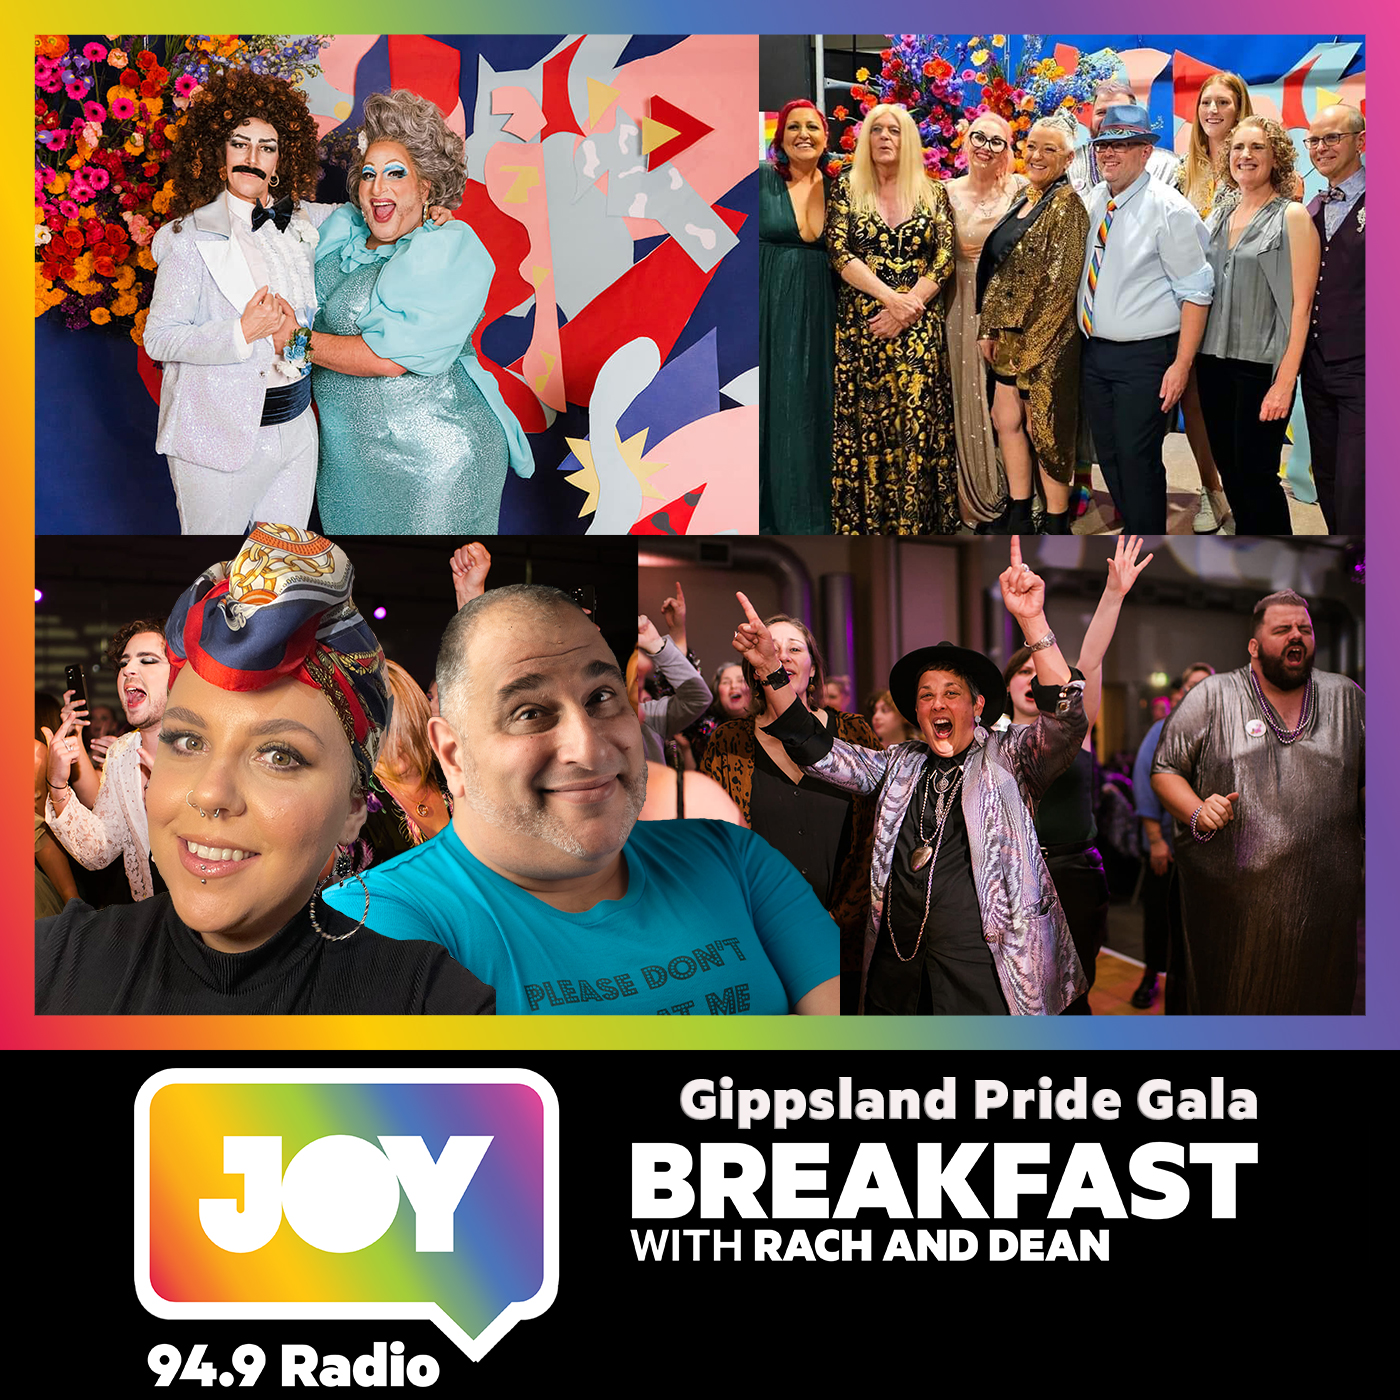 Gippsland Pride Gala goes off!